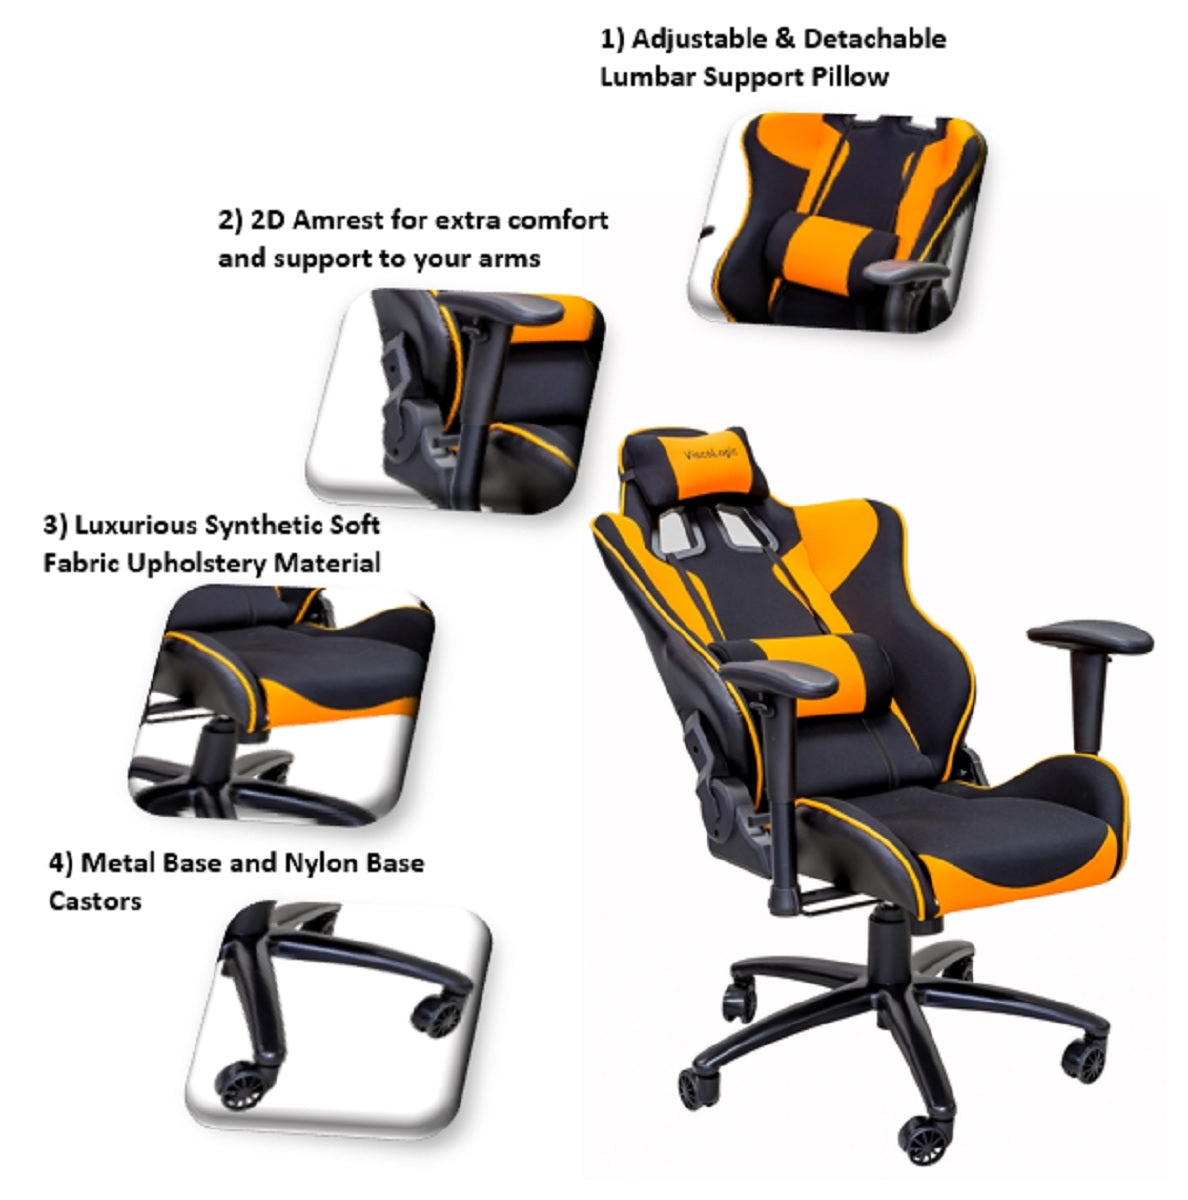 ViscoLogic GTR Gaming Racing Style Swivel Office Chair Black